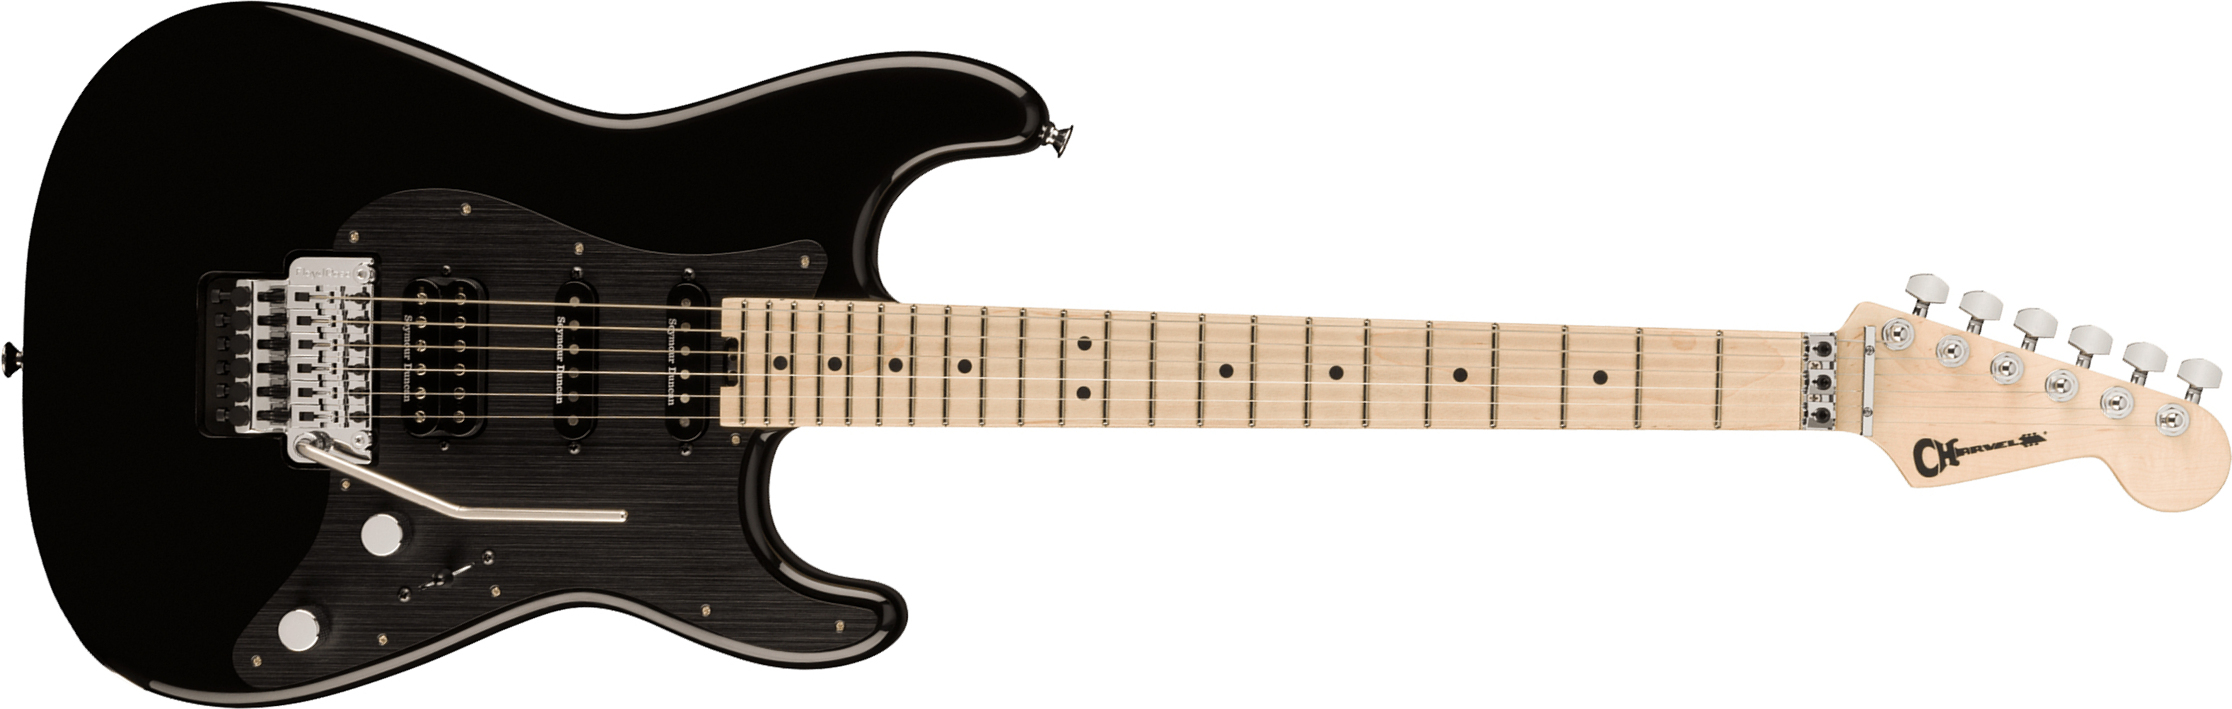 Charvel So-cal Style 1 Hss Fr M Pro-mod Seymour Duncan Mn - Gloss Black - Str shape electric guitar - Main picture